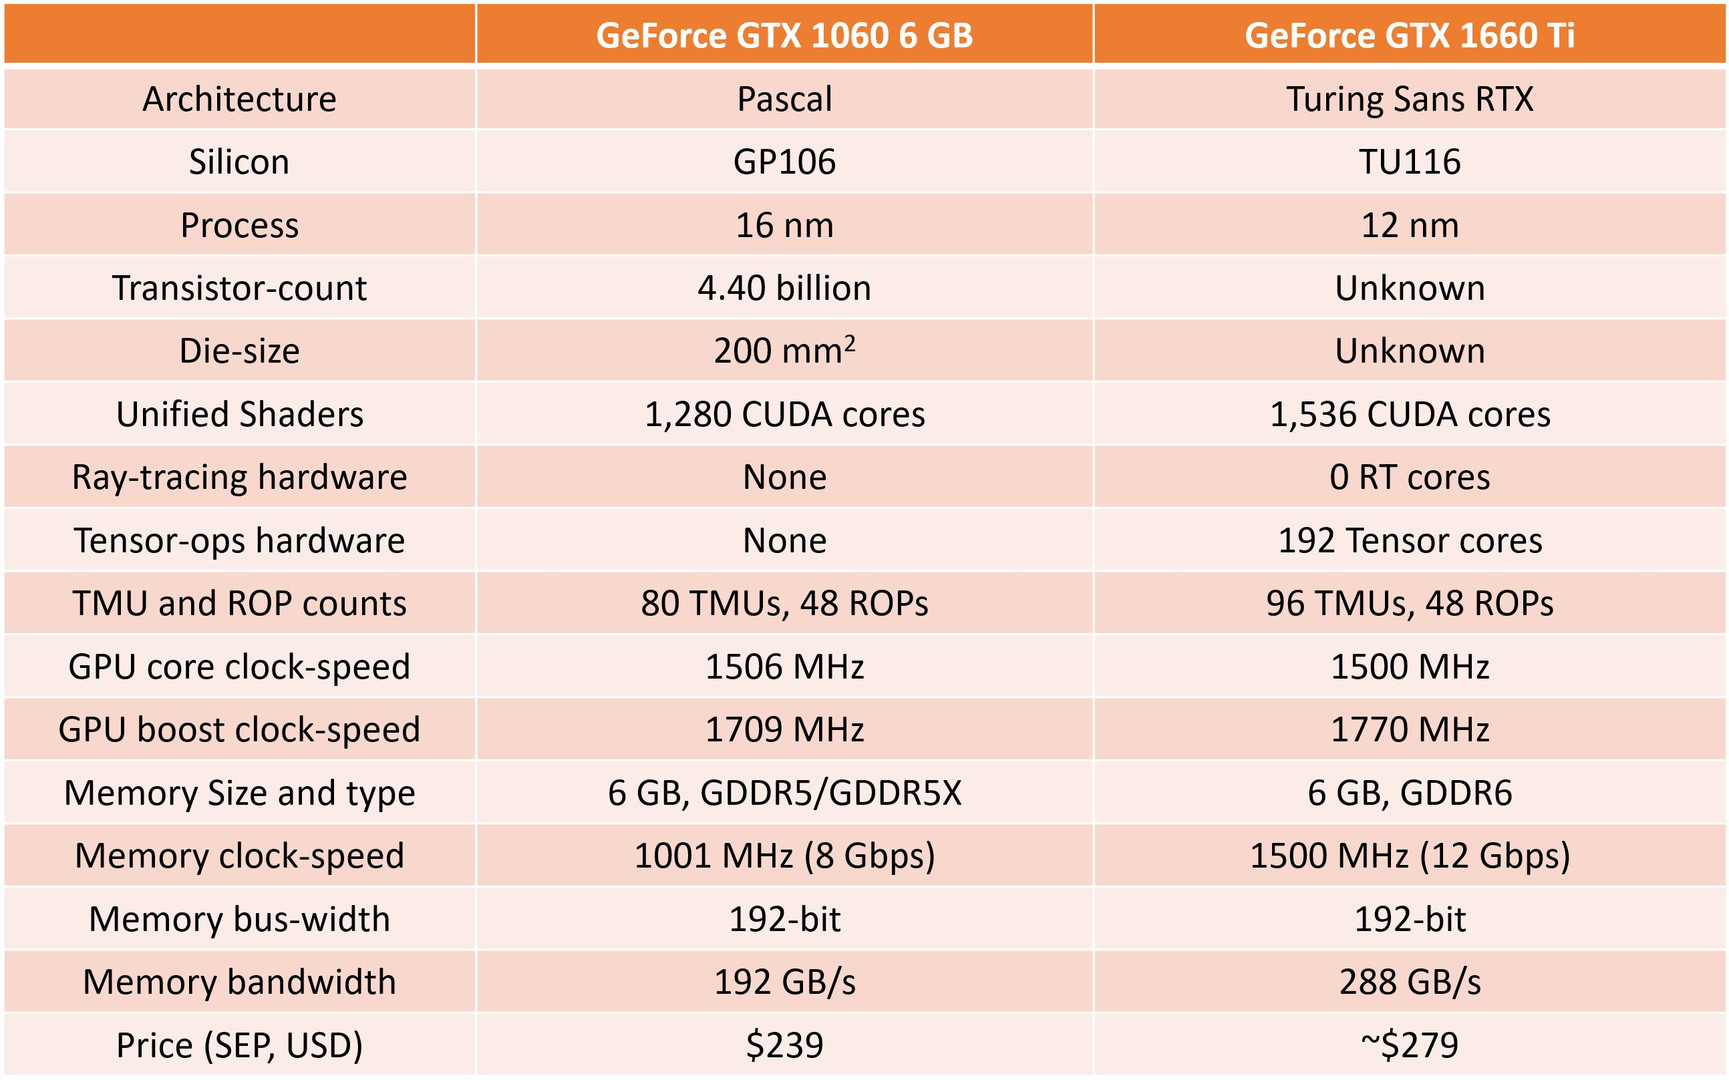 More GeForce GTX 1660 Ti Specs Emerge